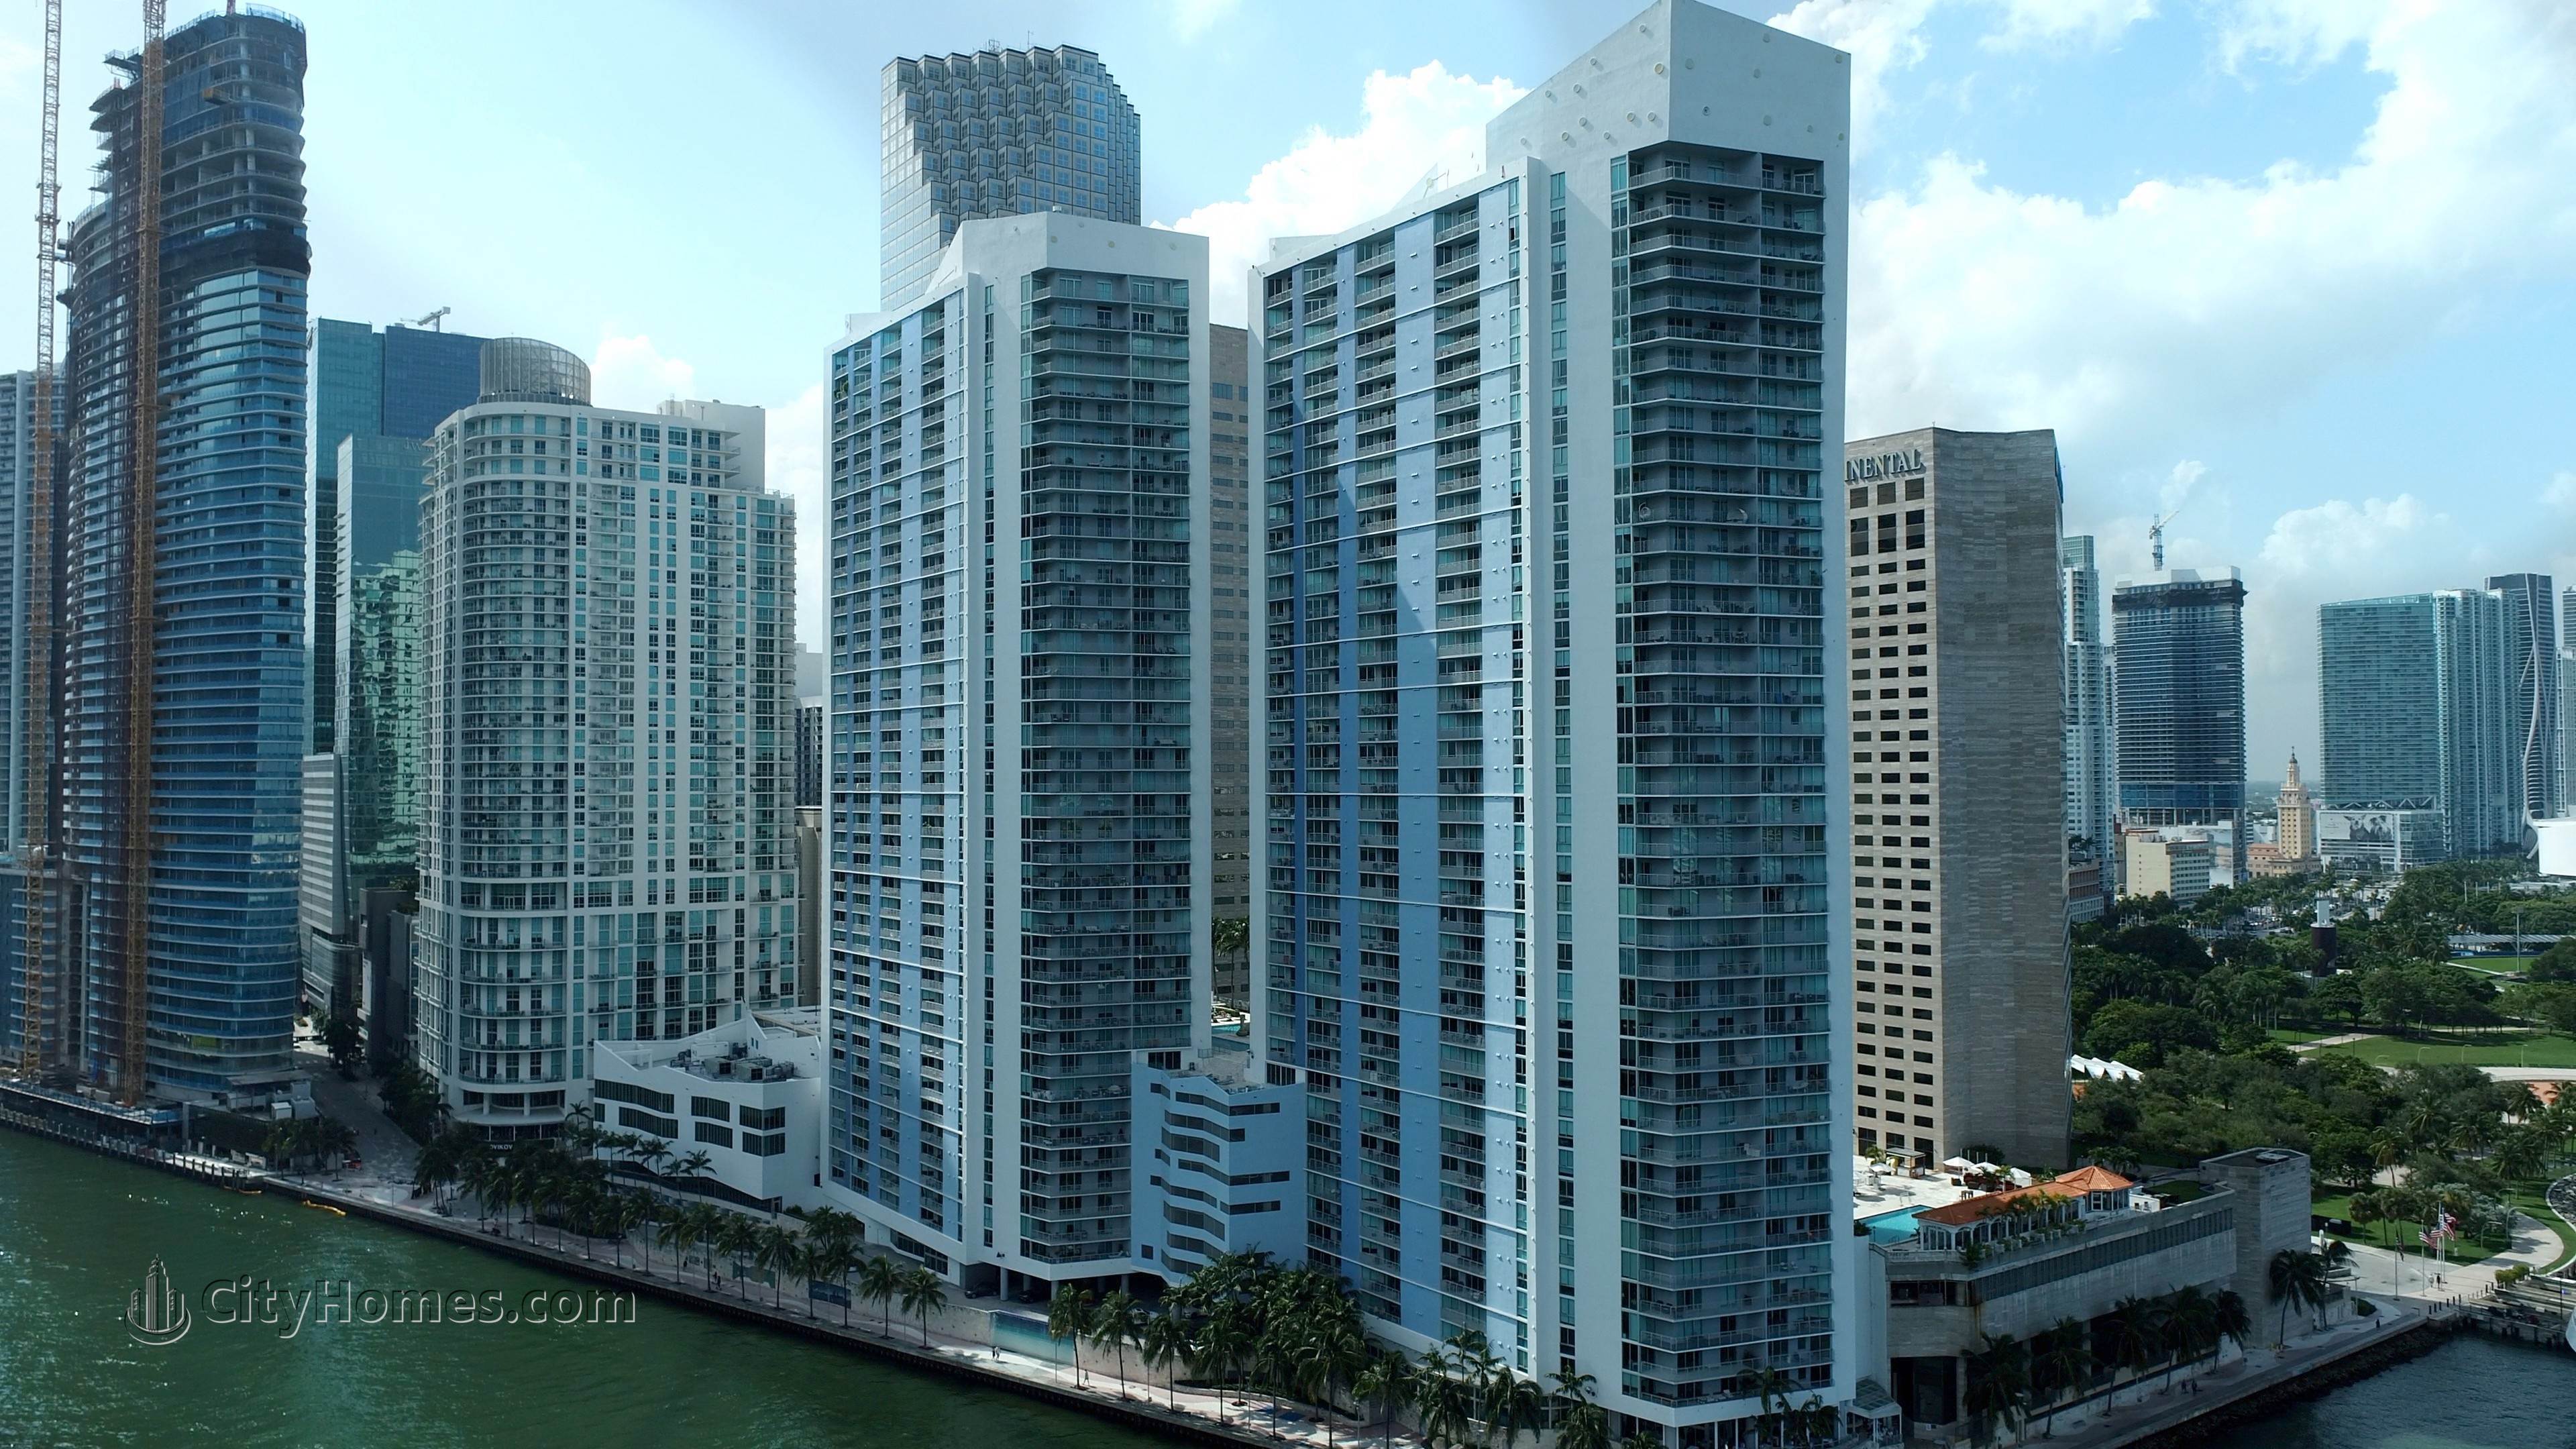 2. One Miami byggnad vid 325 And 335 S Biscayne Blvd, Miami, FL 33131